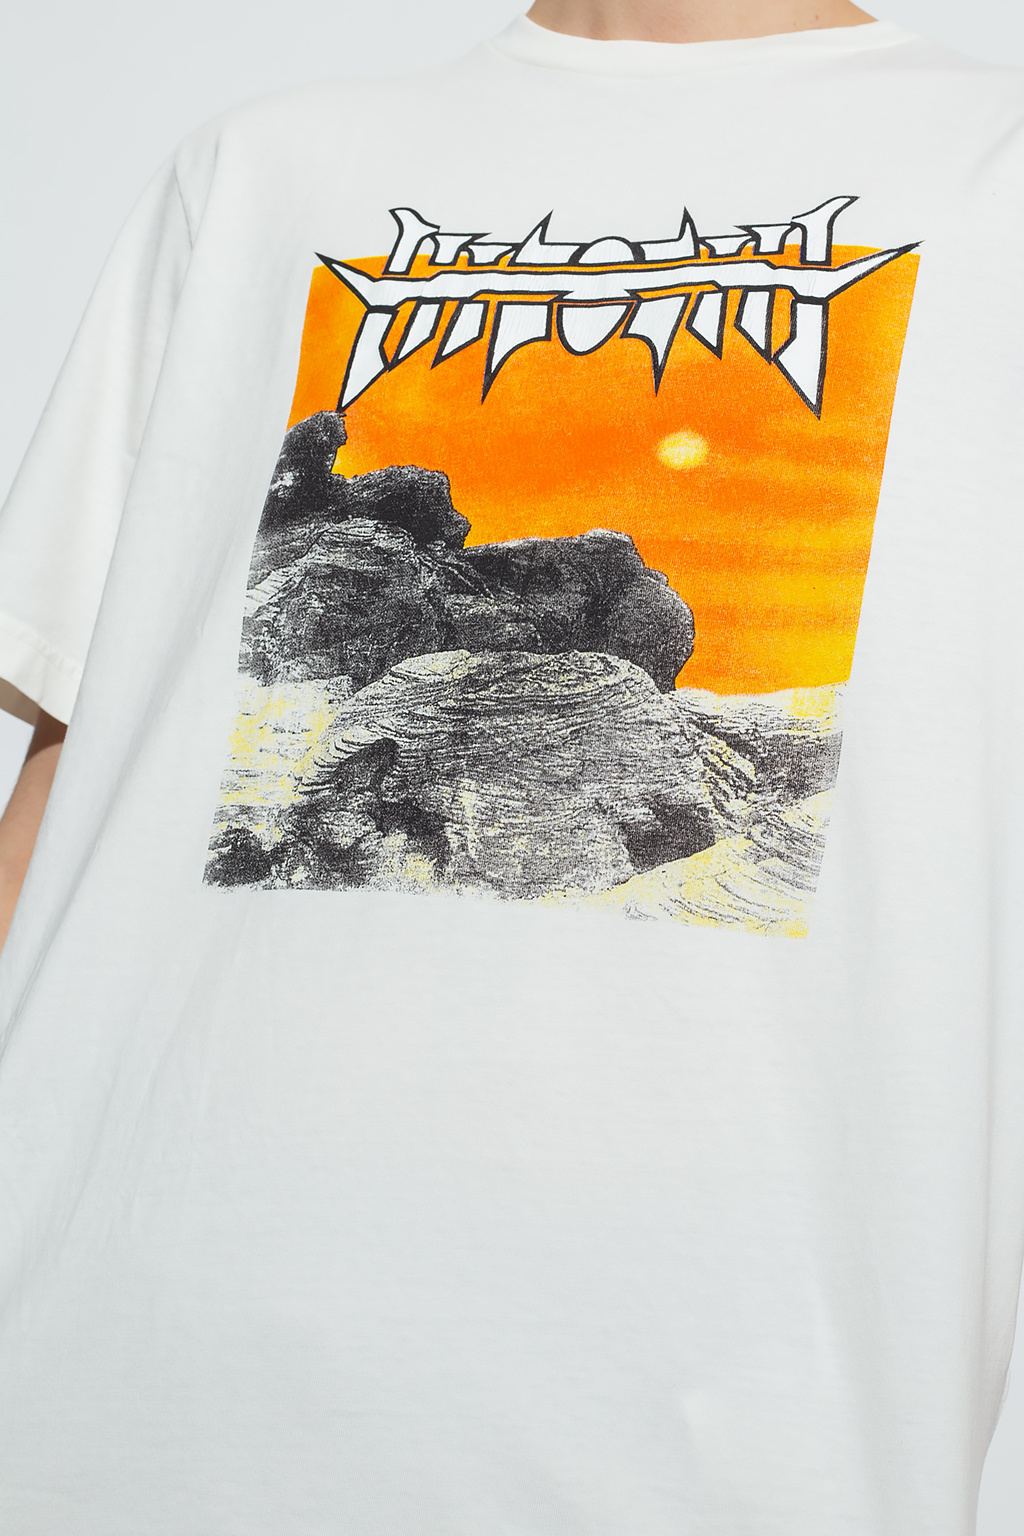 StclaircomoShops | Men\'s Just\' 1 printed melange shirt T shirt on Clothing - 2 | \'T - white vsct Diesel t - clubwear anthracite